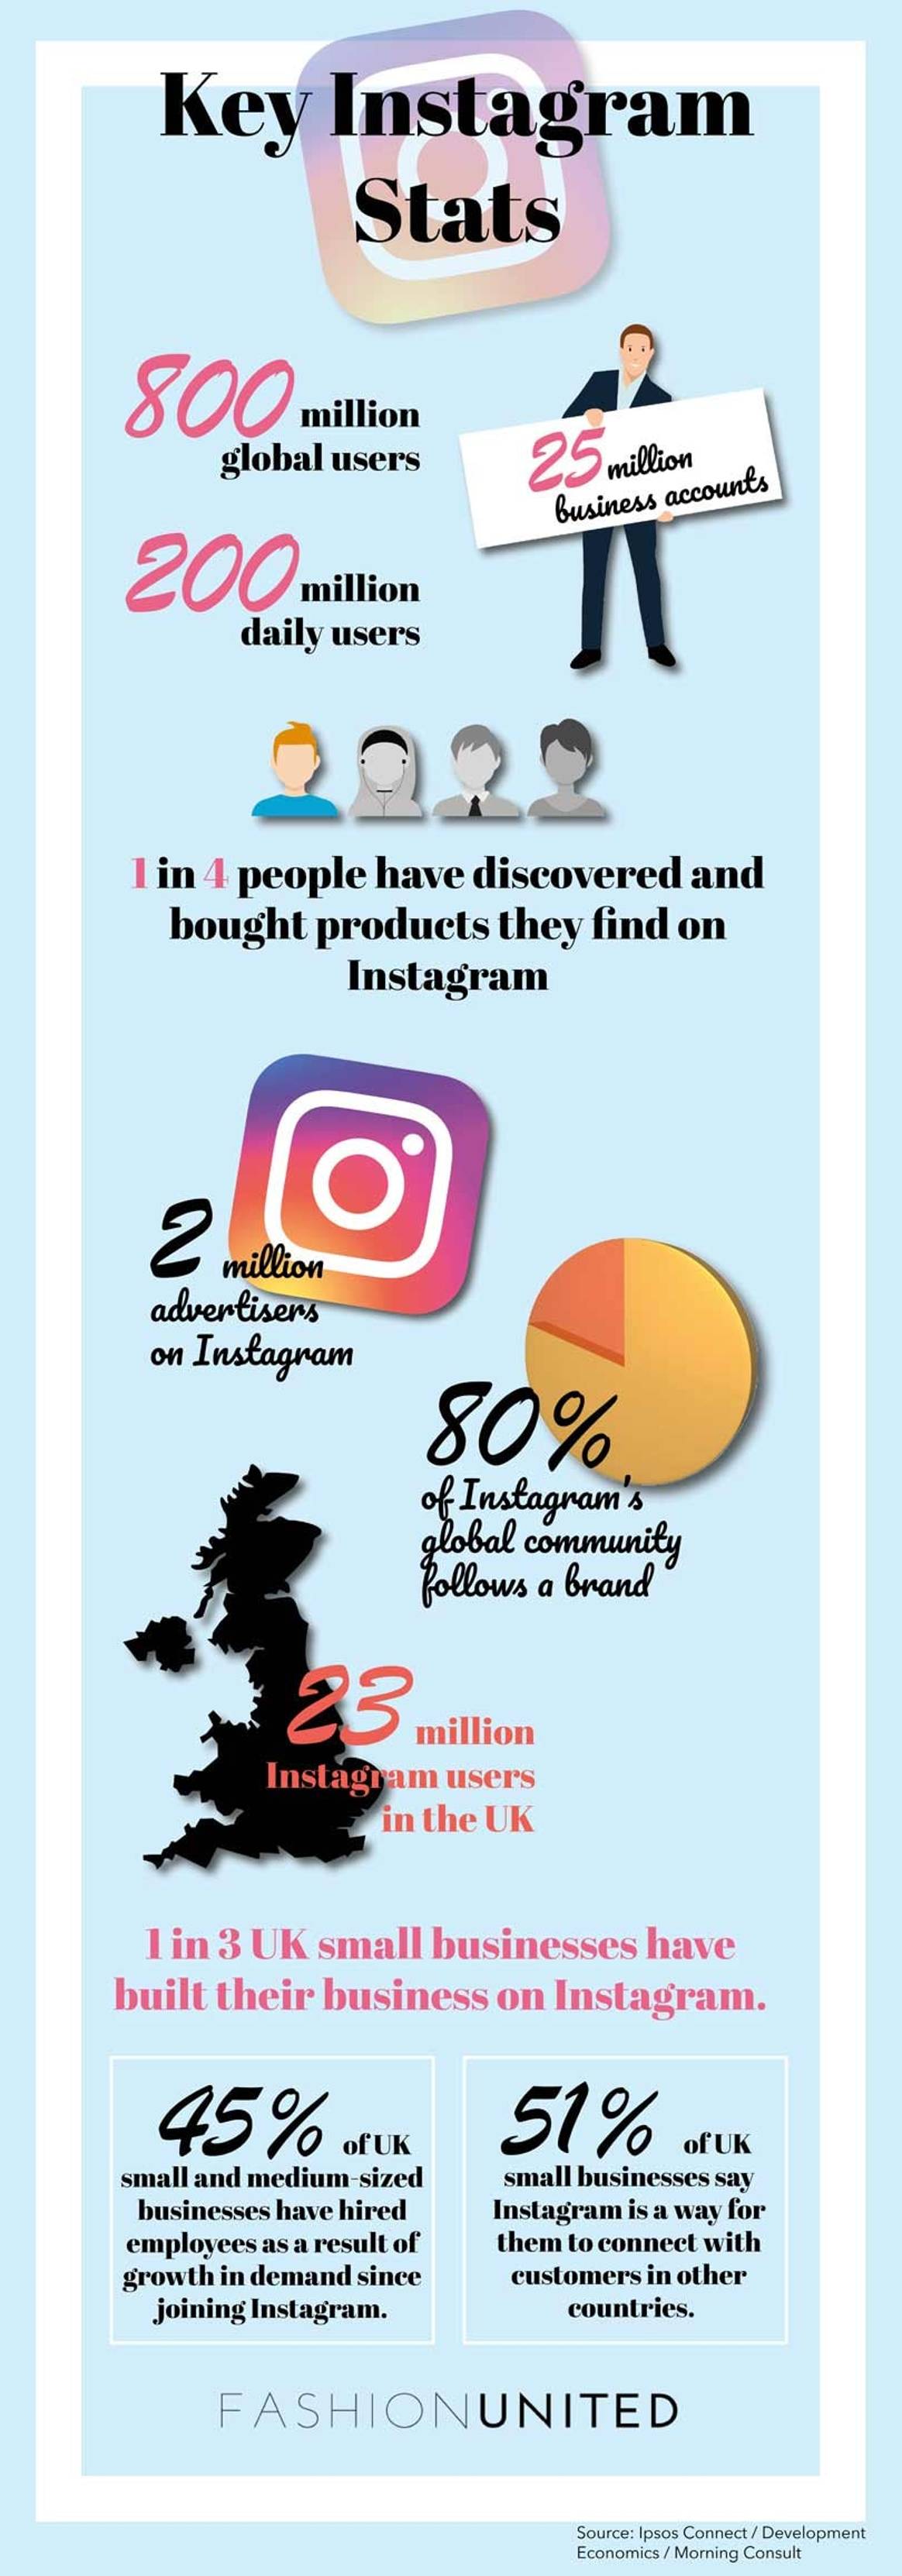 Instagram creating new wave of UK entrepreneurs